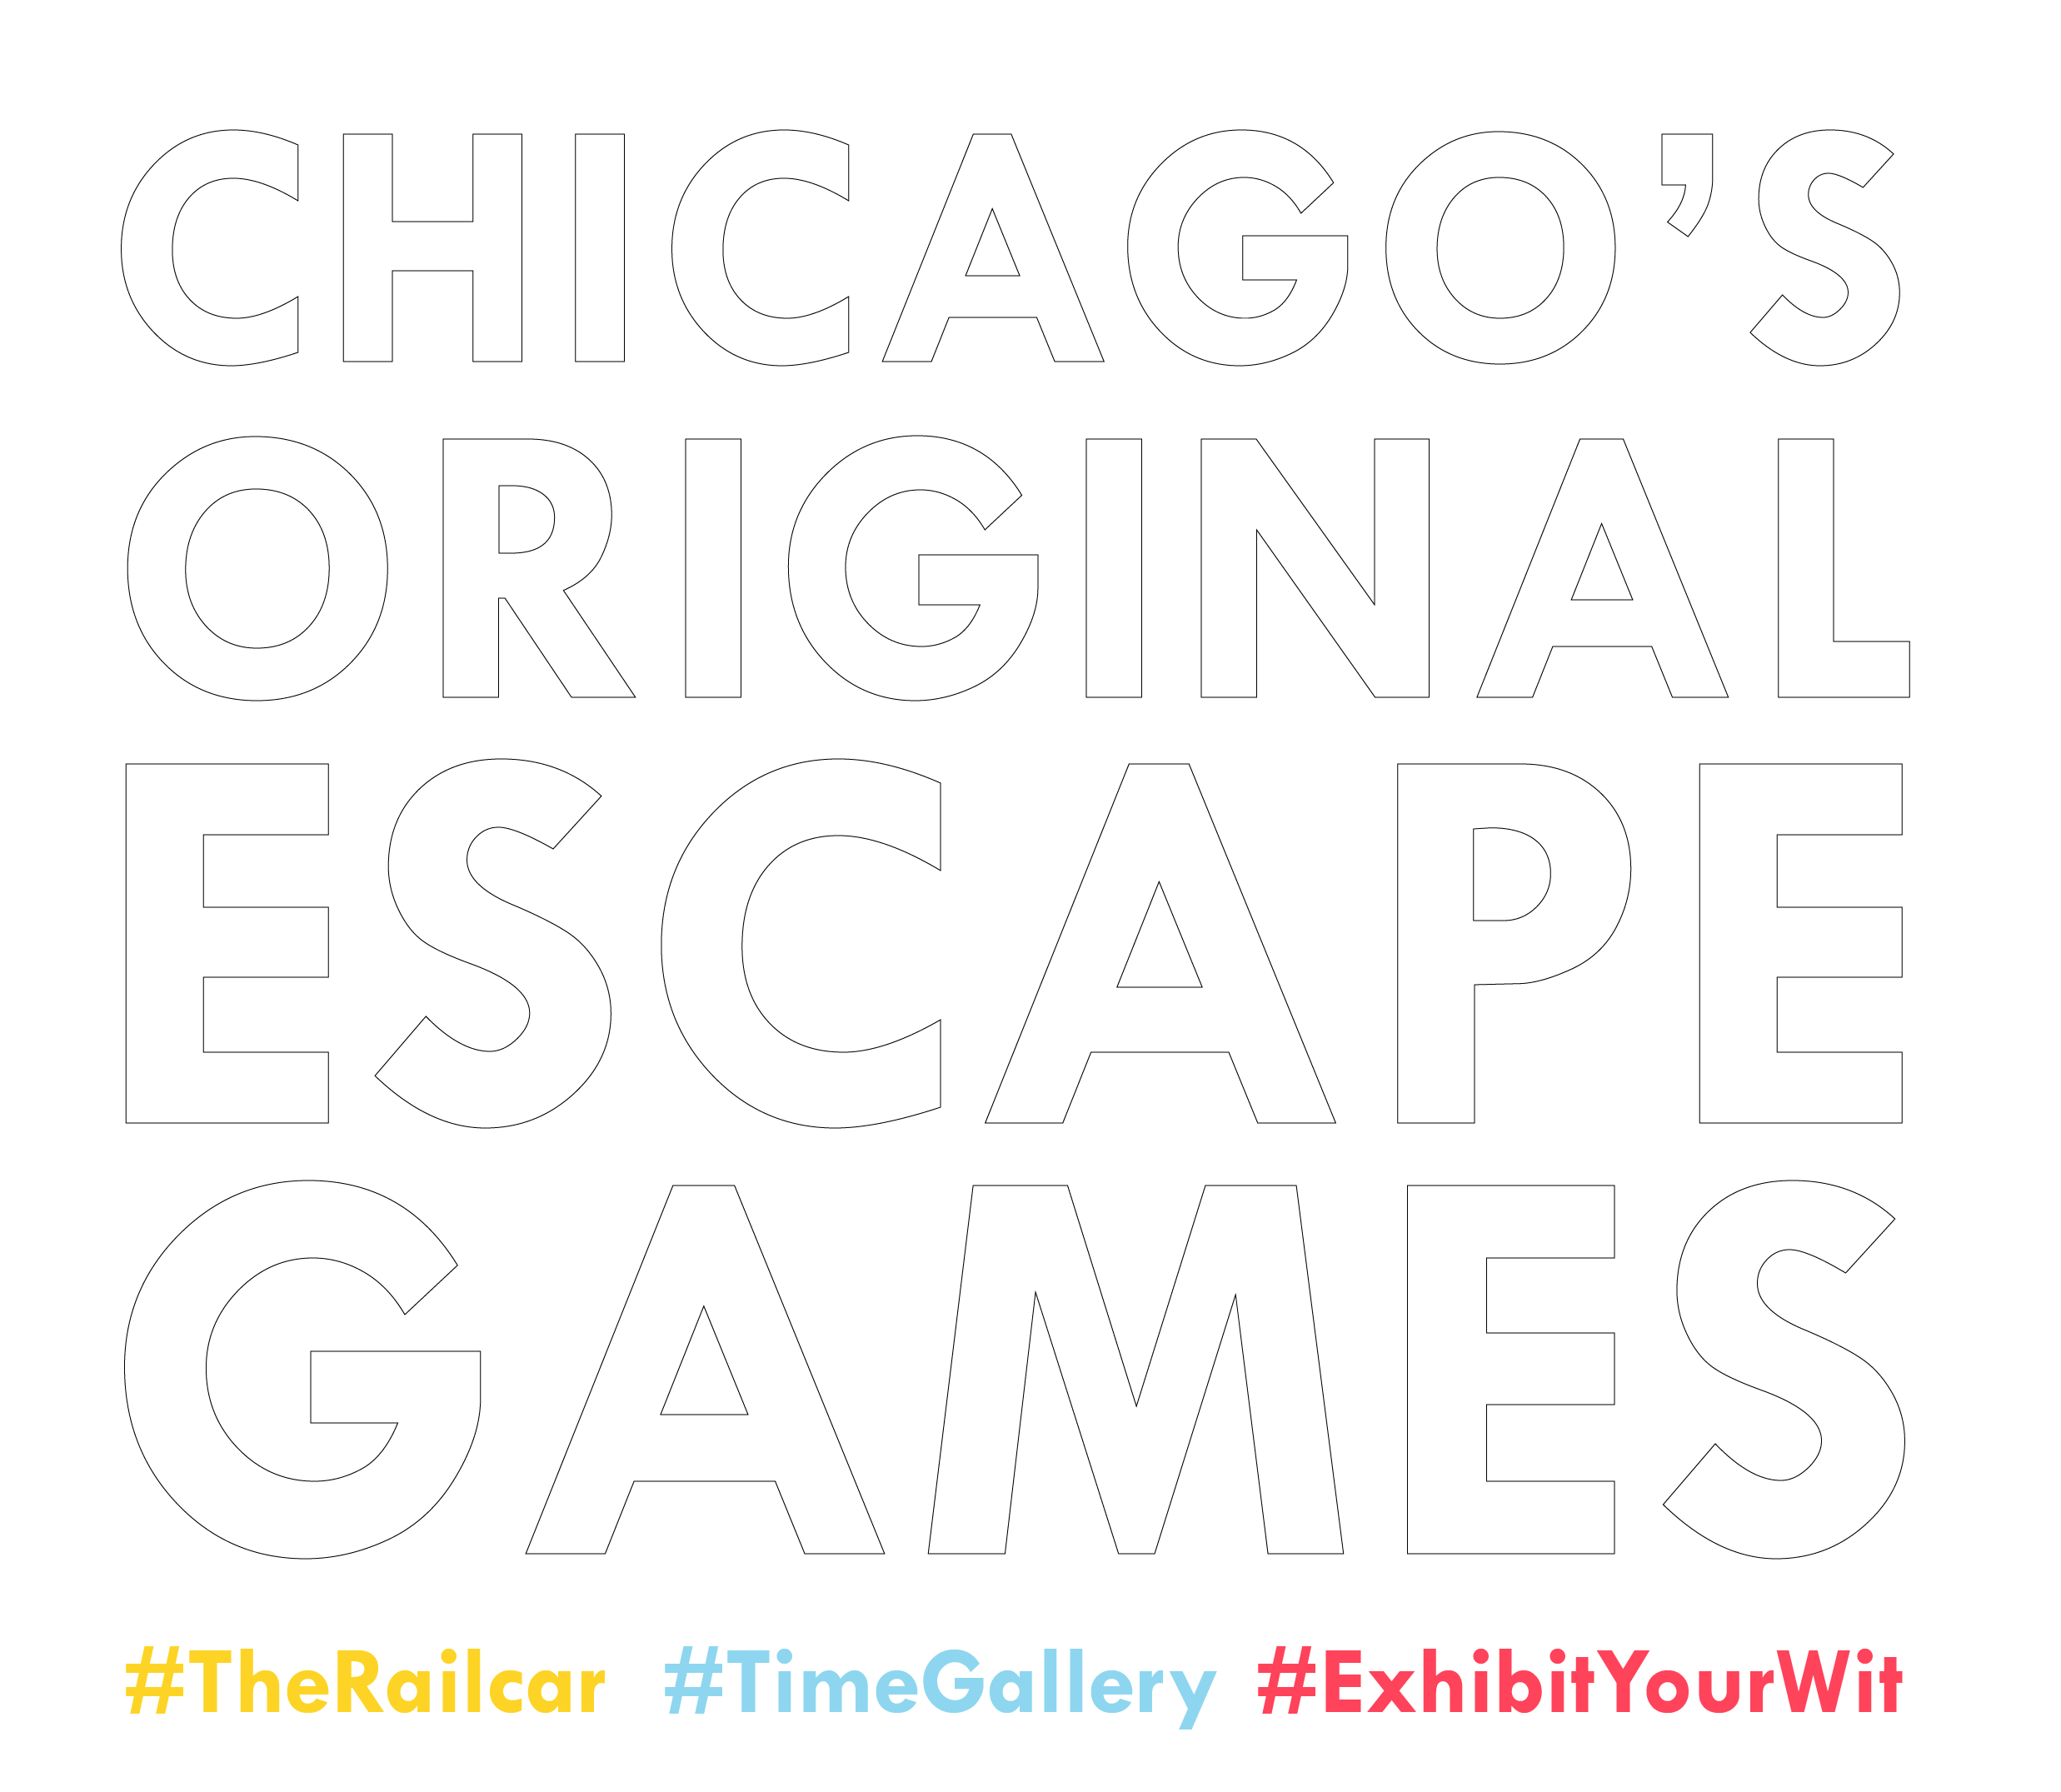 Room Escape Games In Chicago Escape Artistry